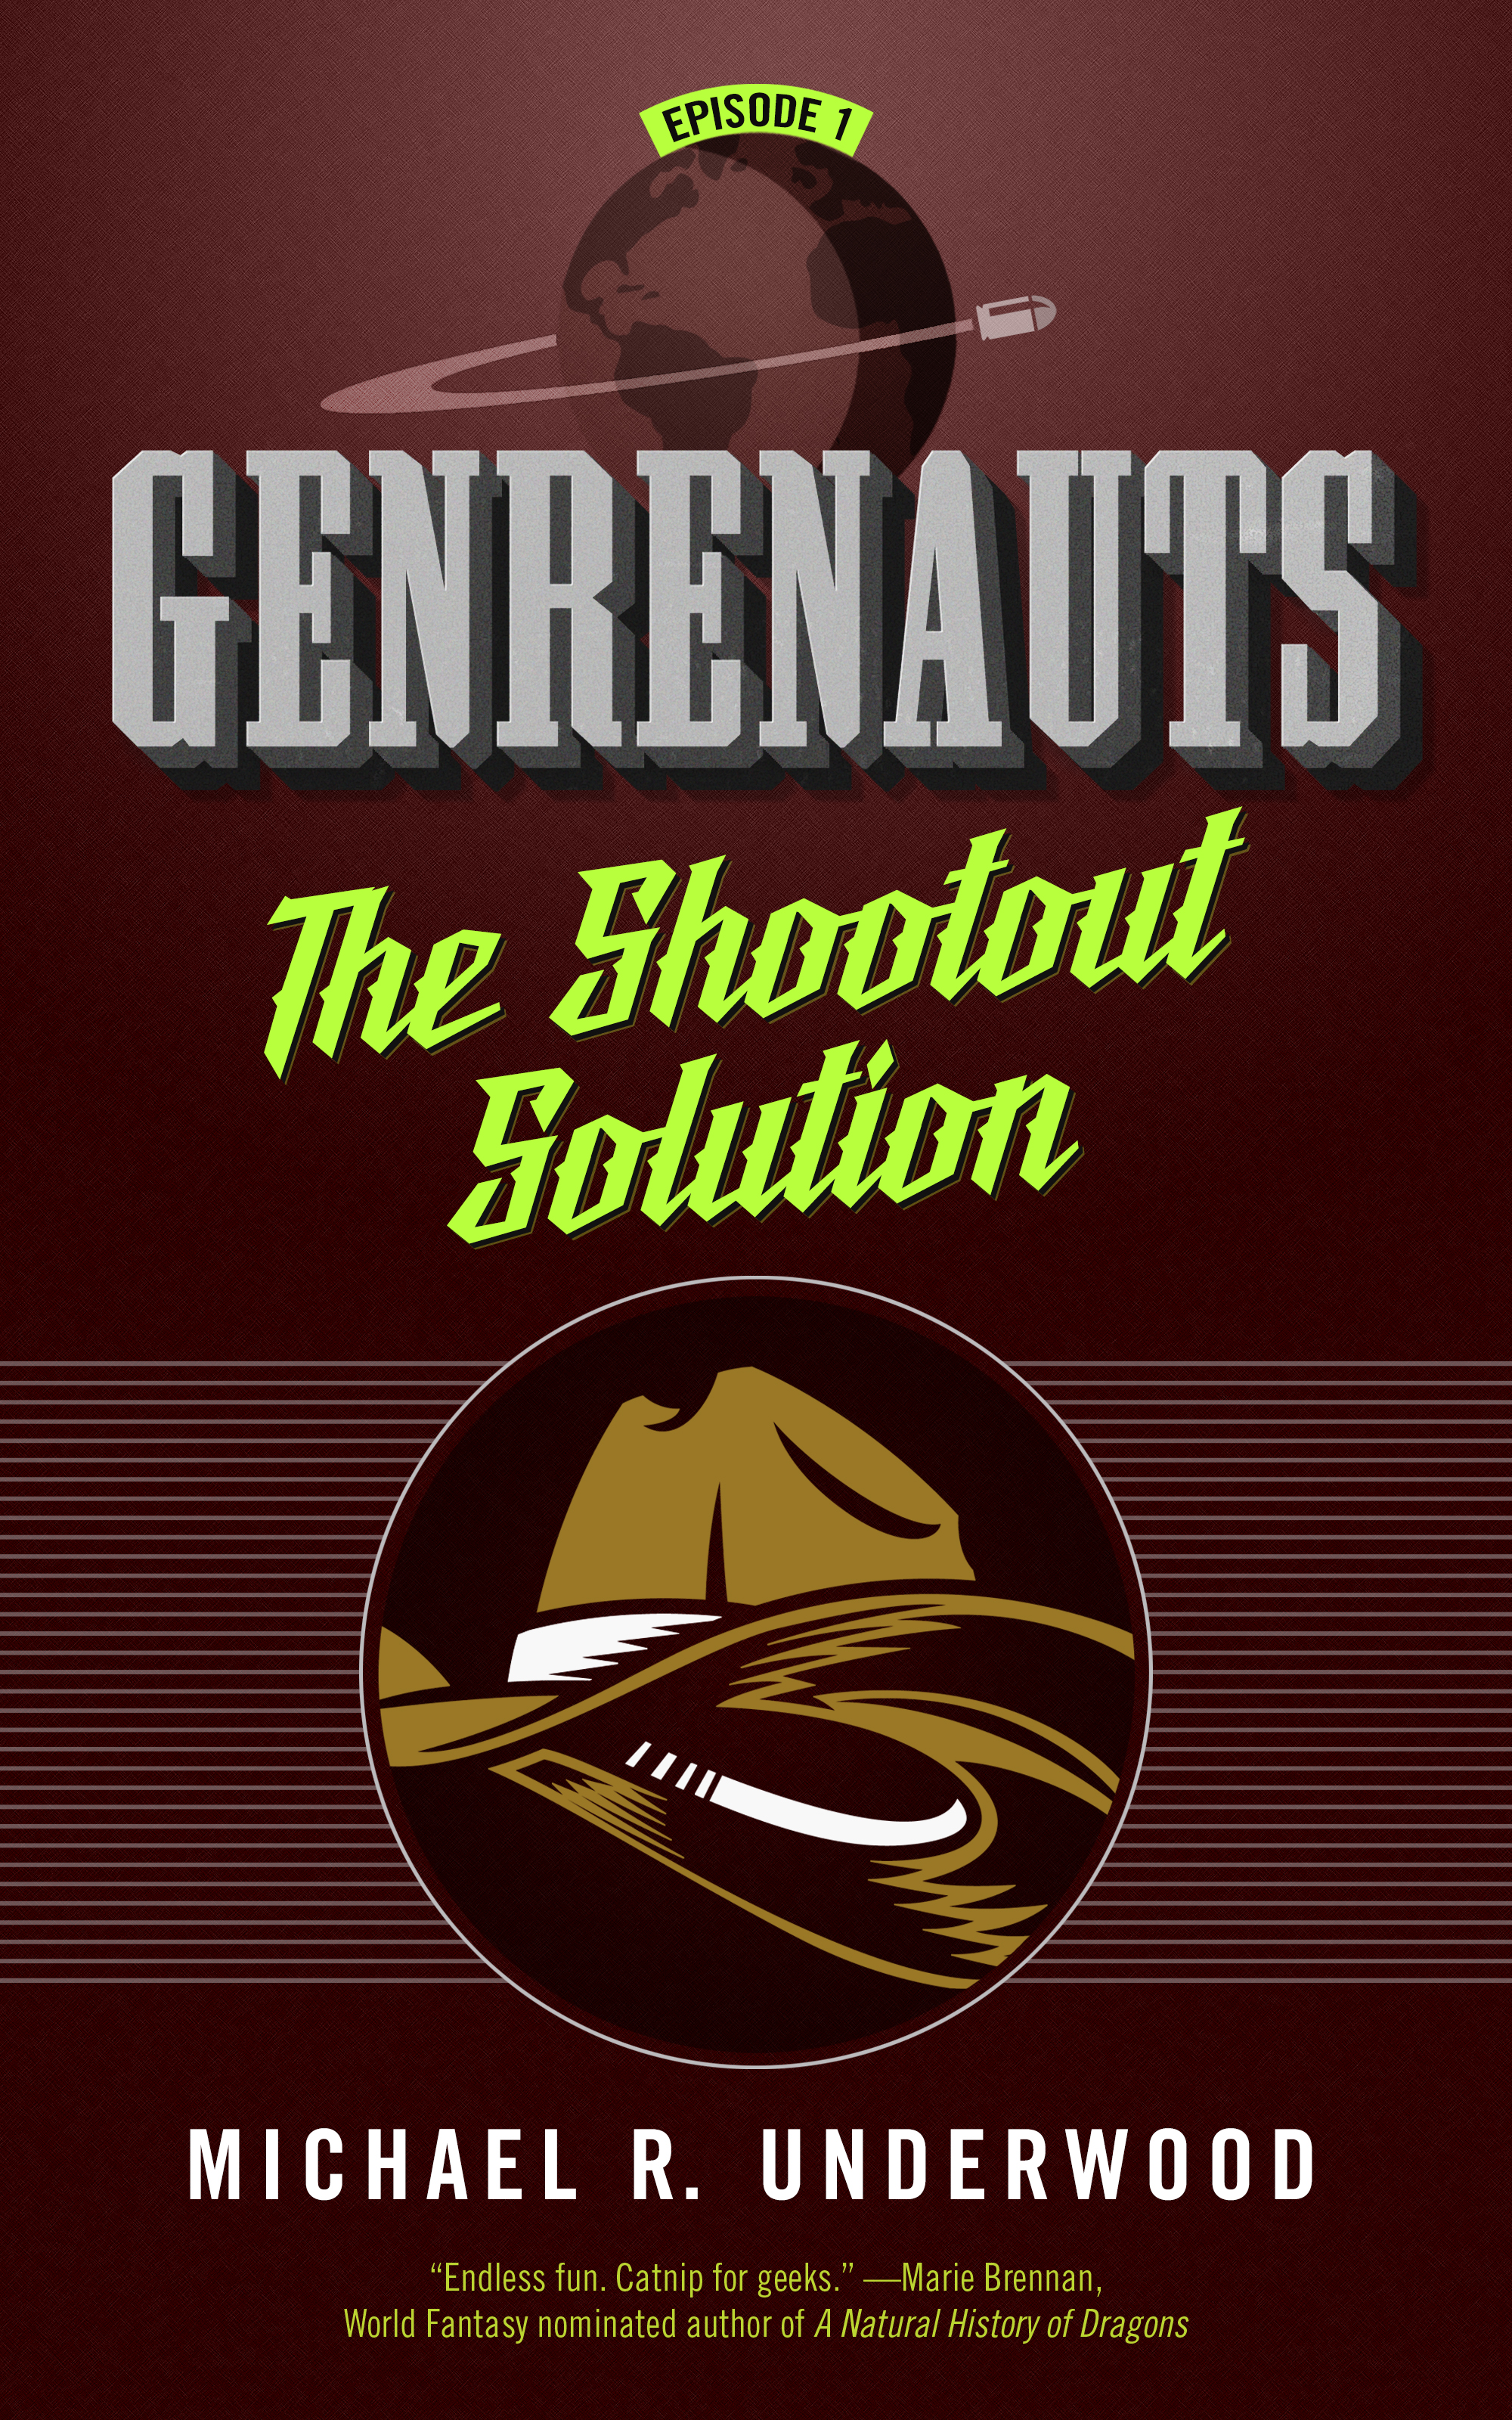 The Shootout Solution : Genrenauts Episode 1 by Michael R. Underwood